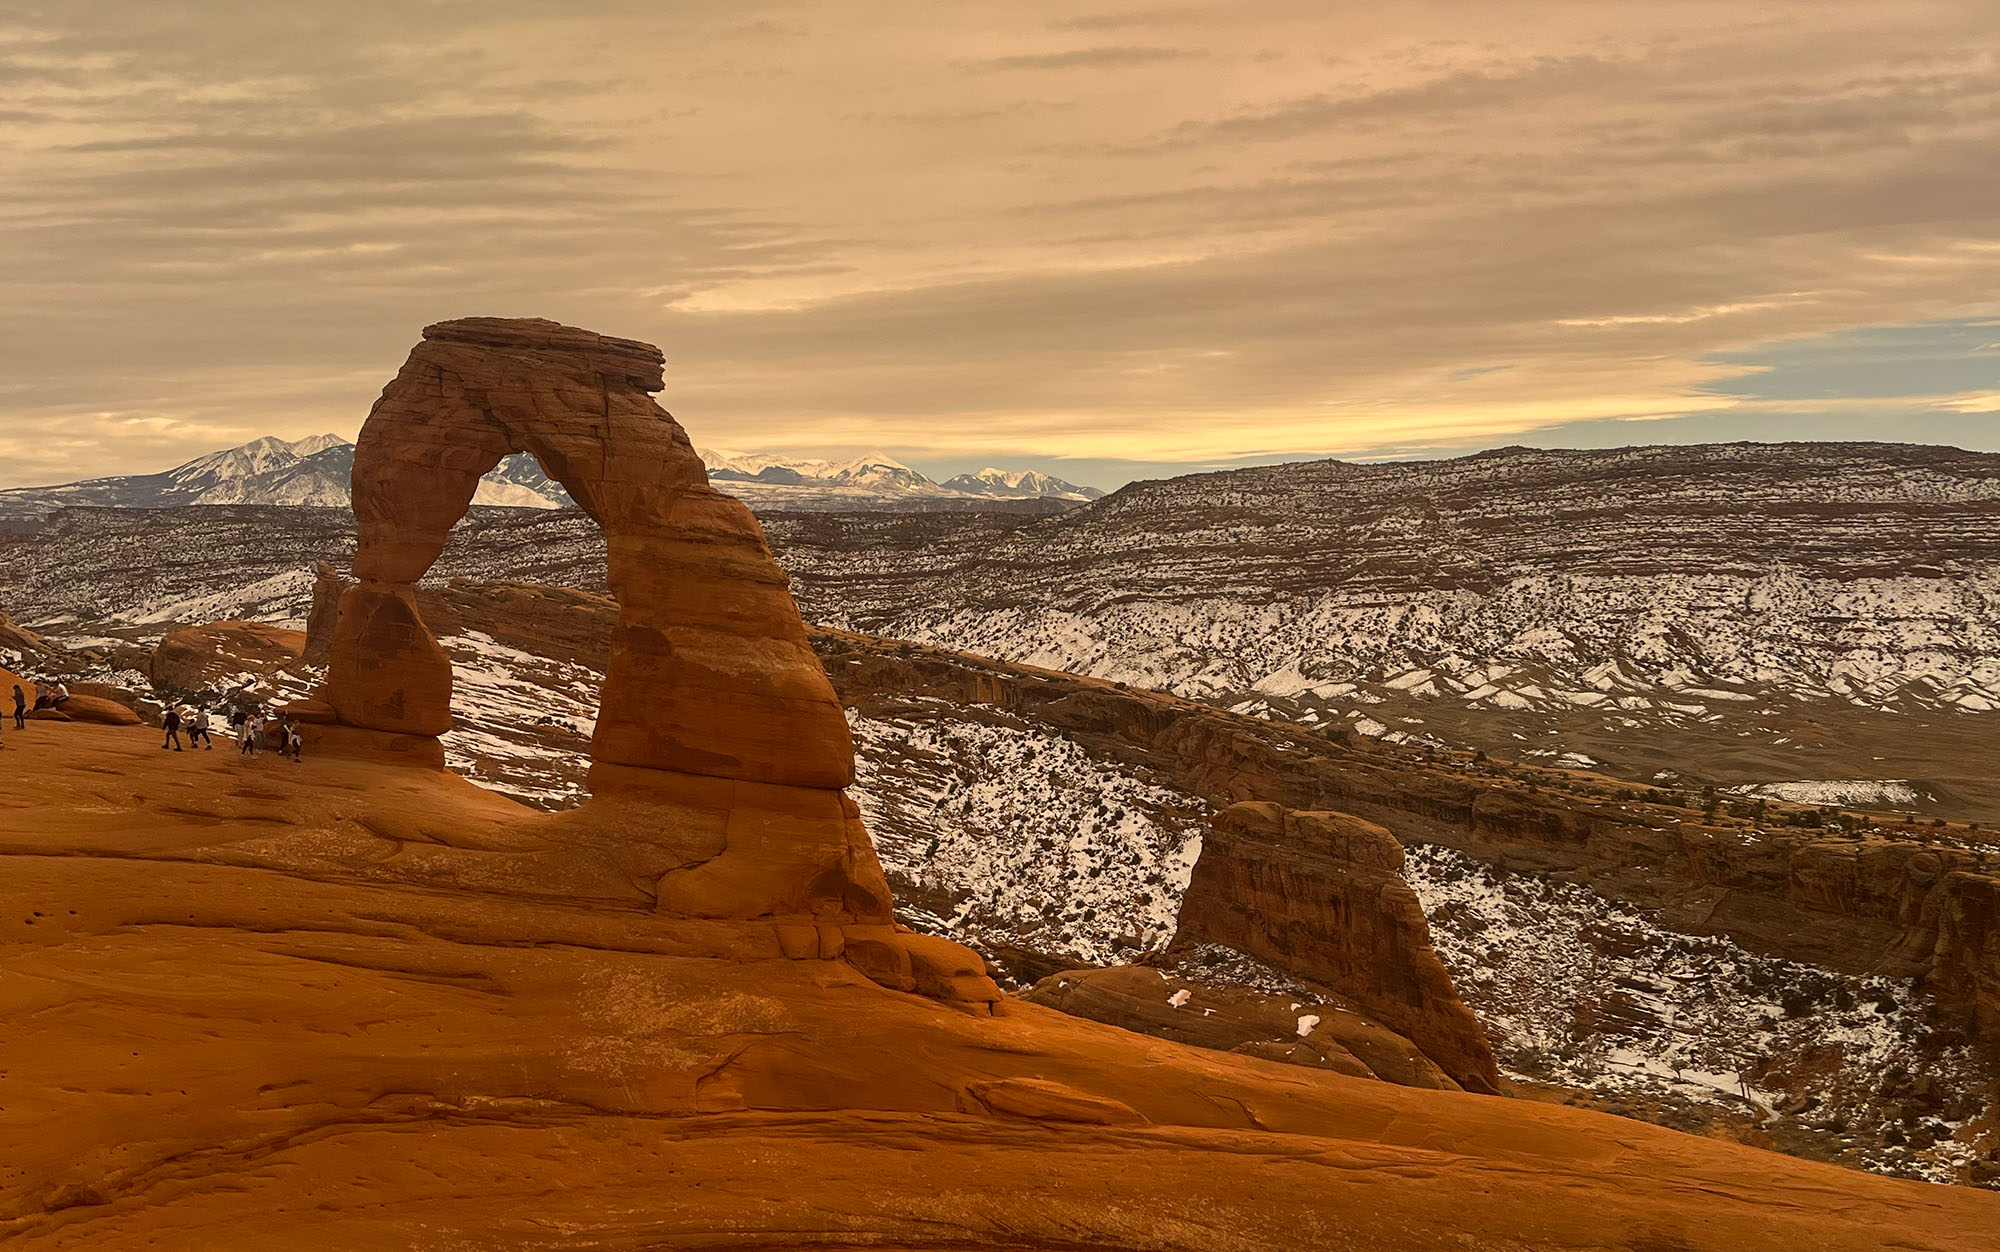 Delicate arch viewed through Cheyenne lens.